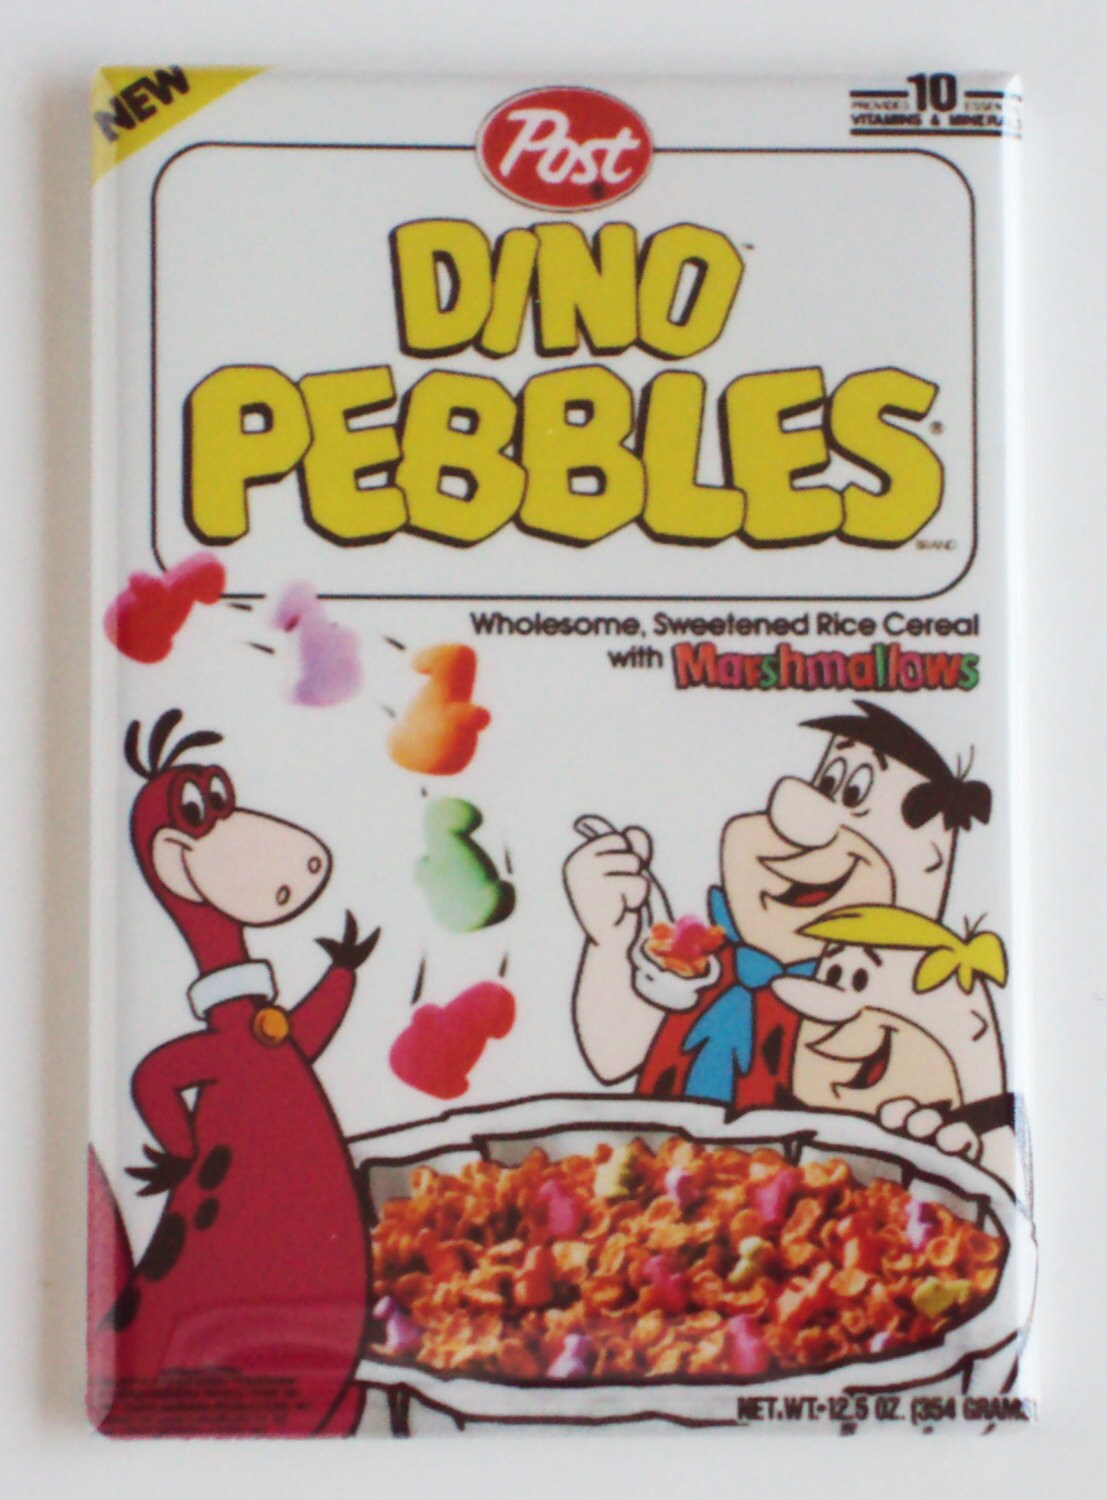 Dino Pebbles Cereal Box Fridge Magnet